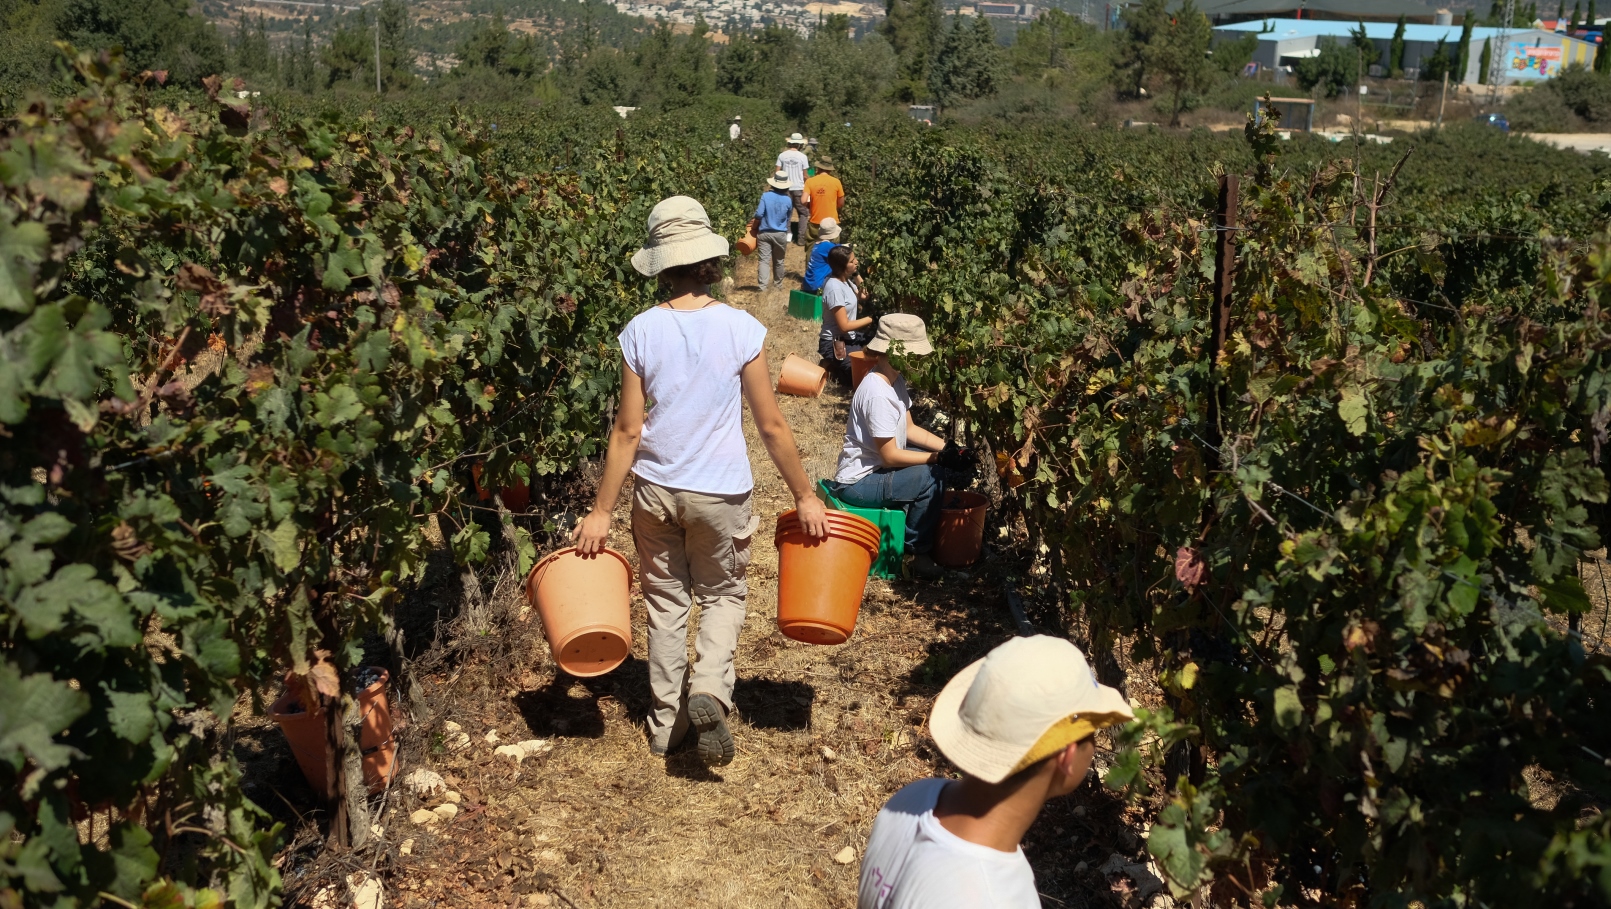 Picking grapes on Kibbutz Tzuba, near Jerusalem. Photo by Yaniv Nadav/FLASH90